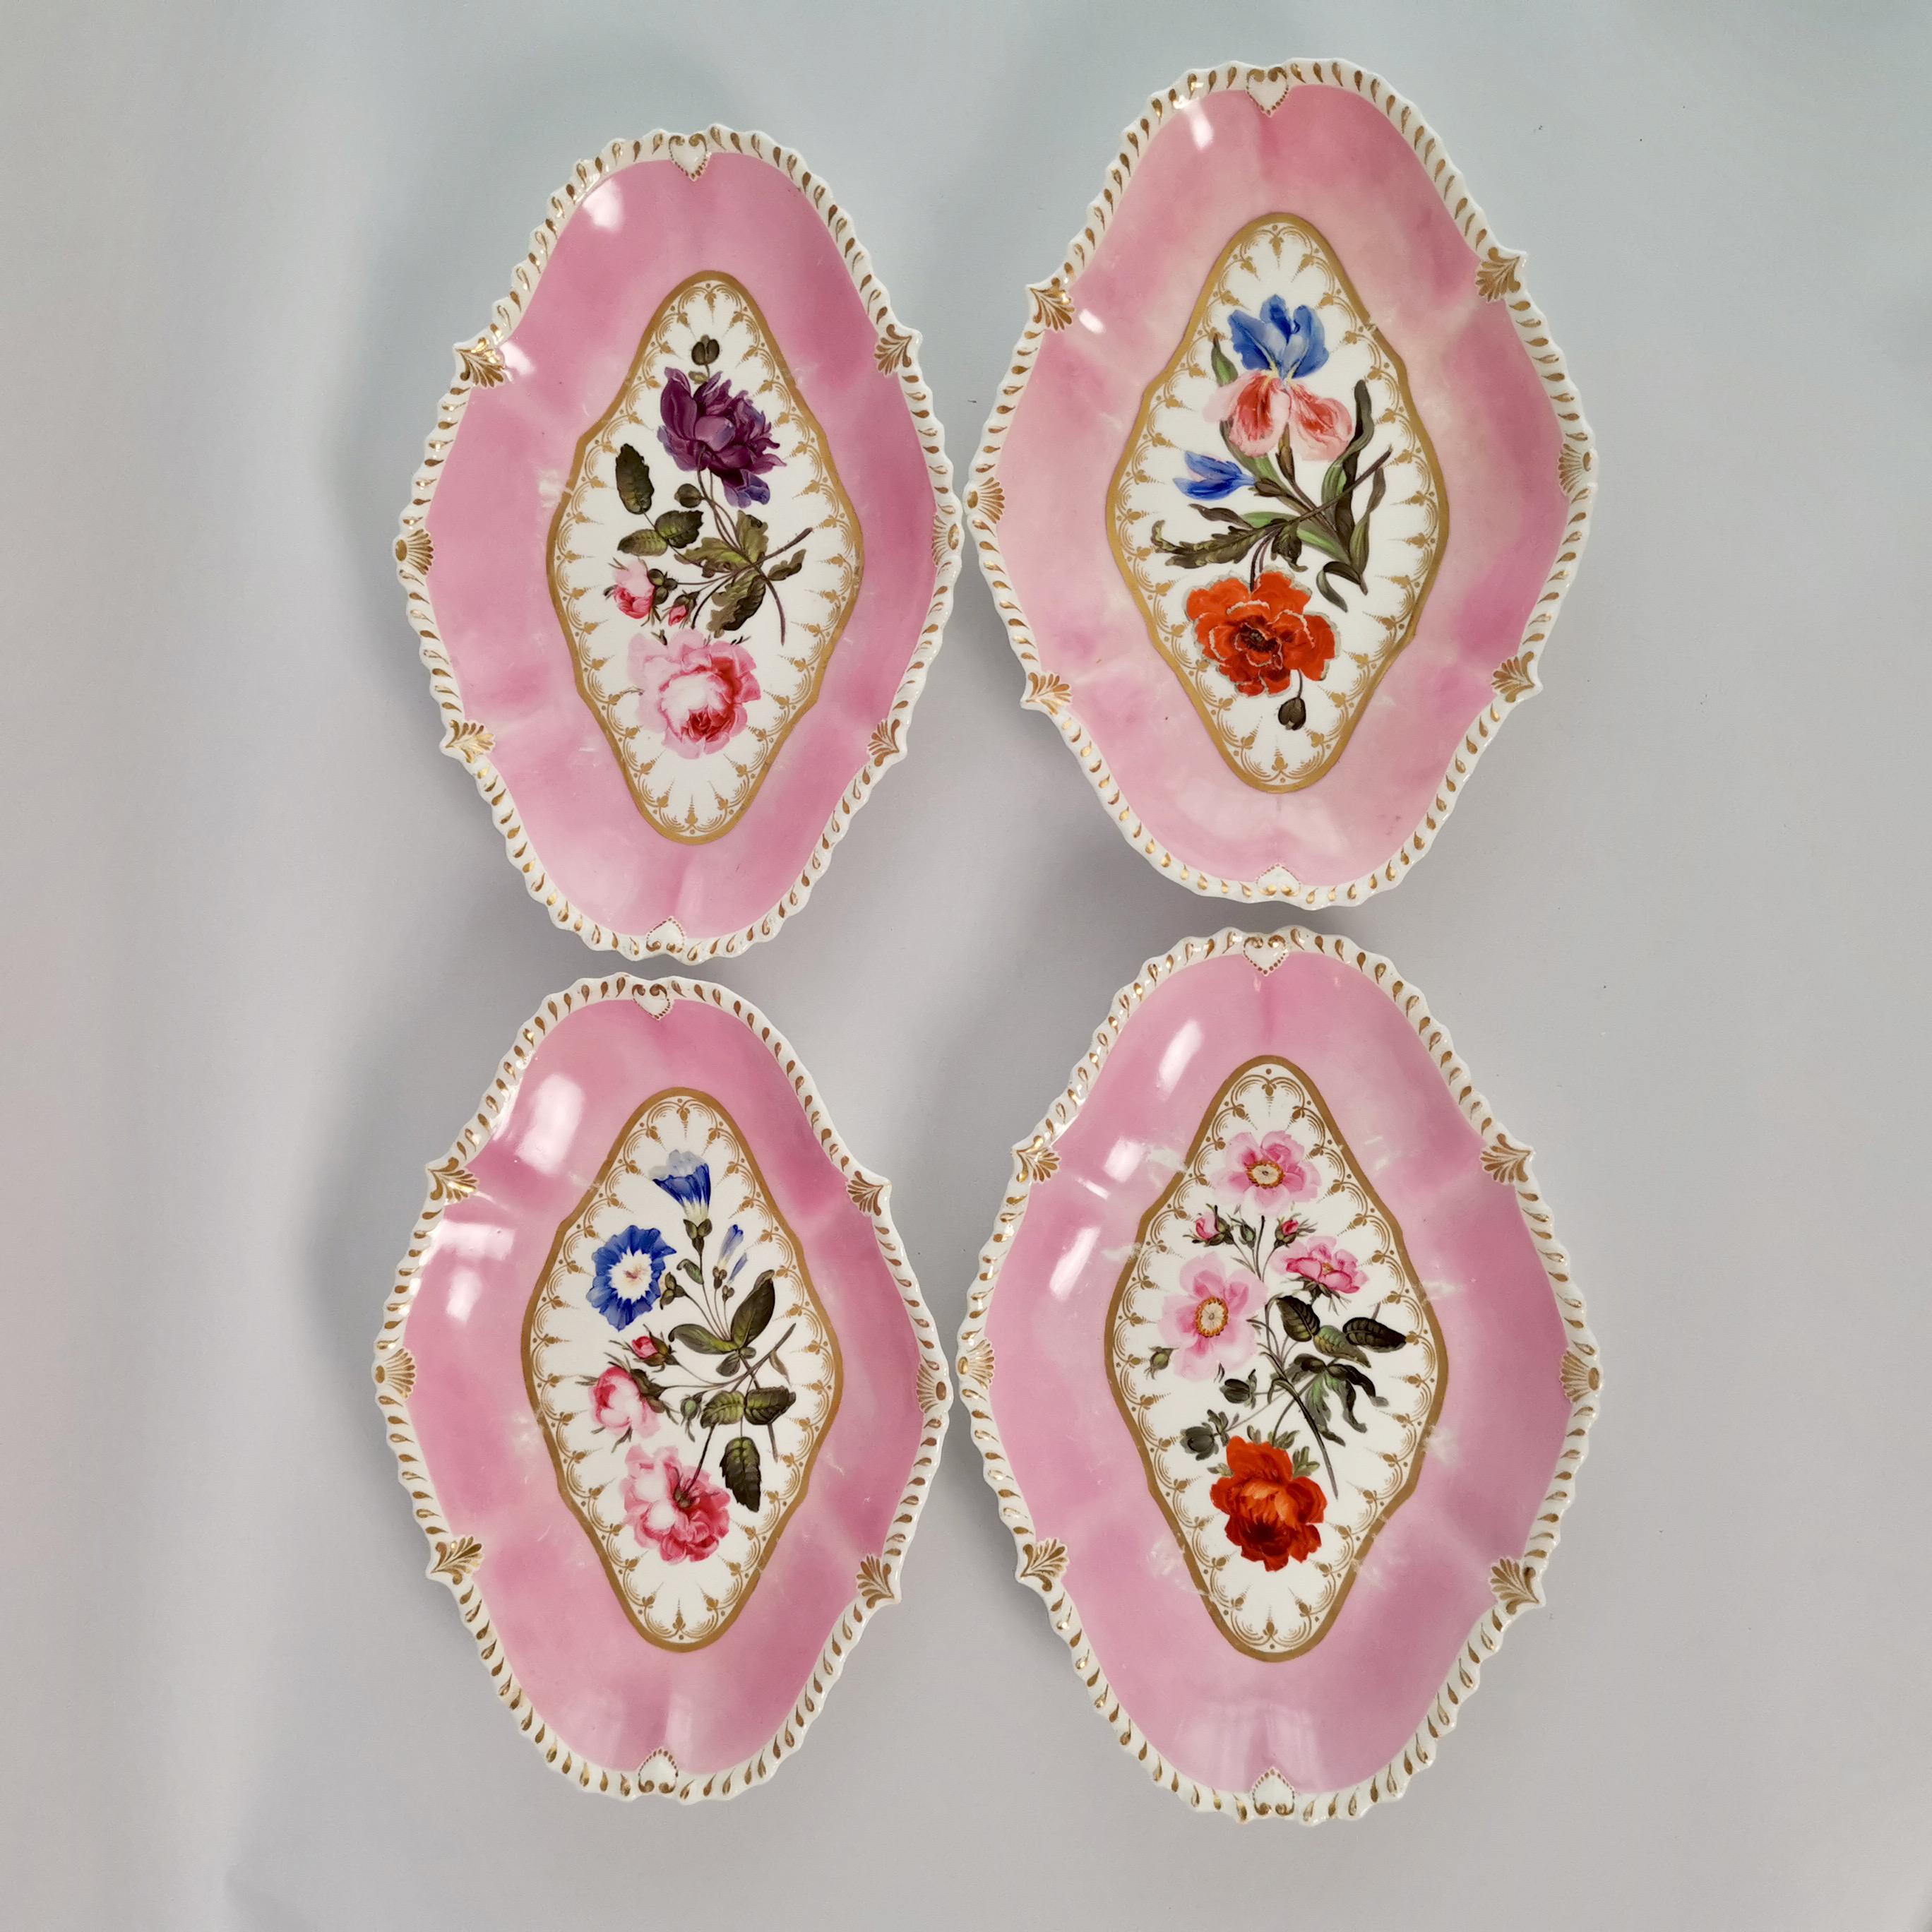 Coalport Porcelain Dessert Service, Pink with Flowers, Regency 1820-1825 3